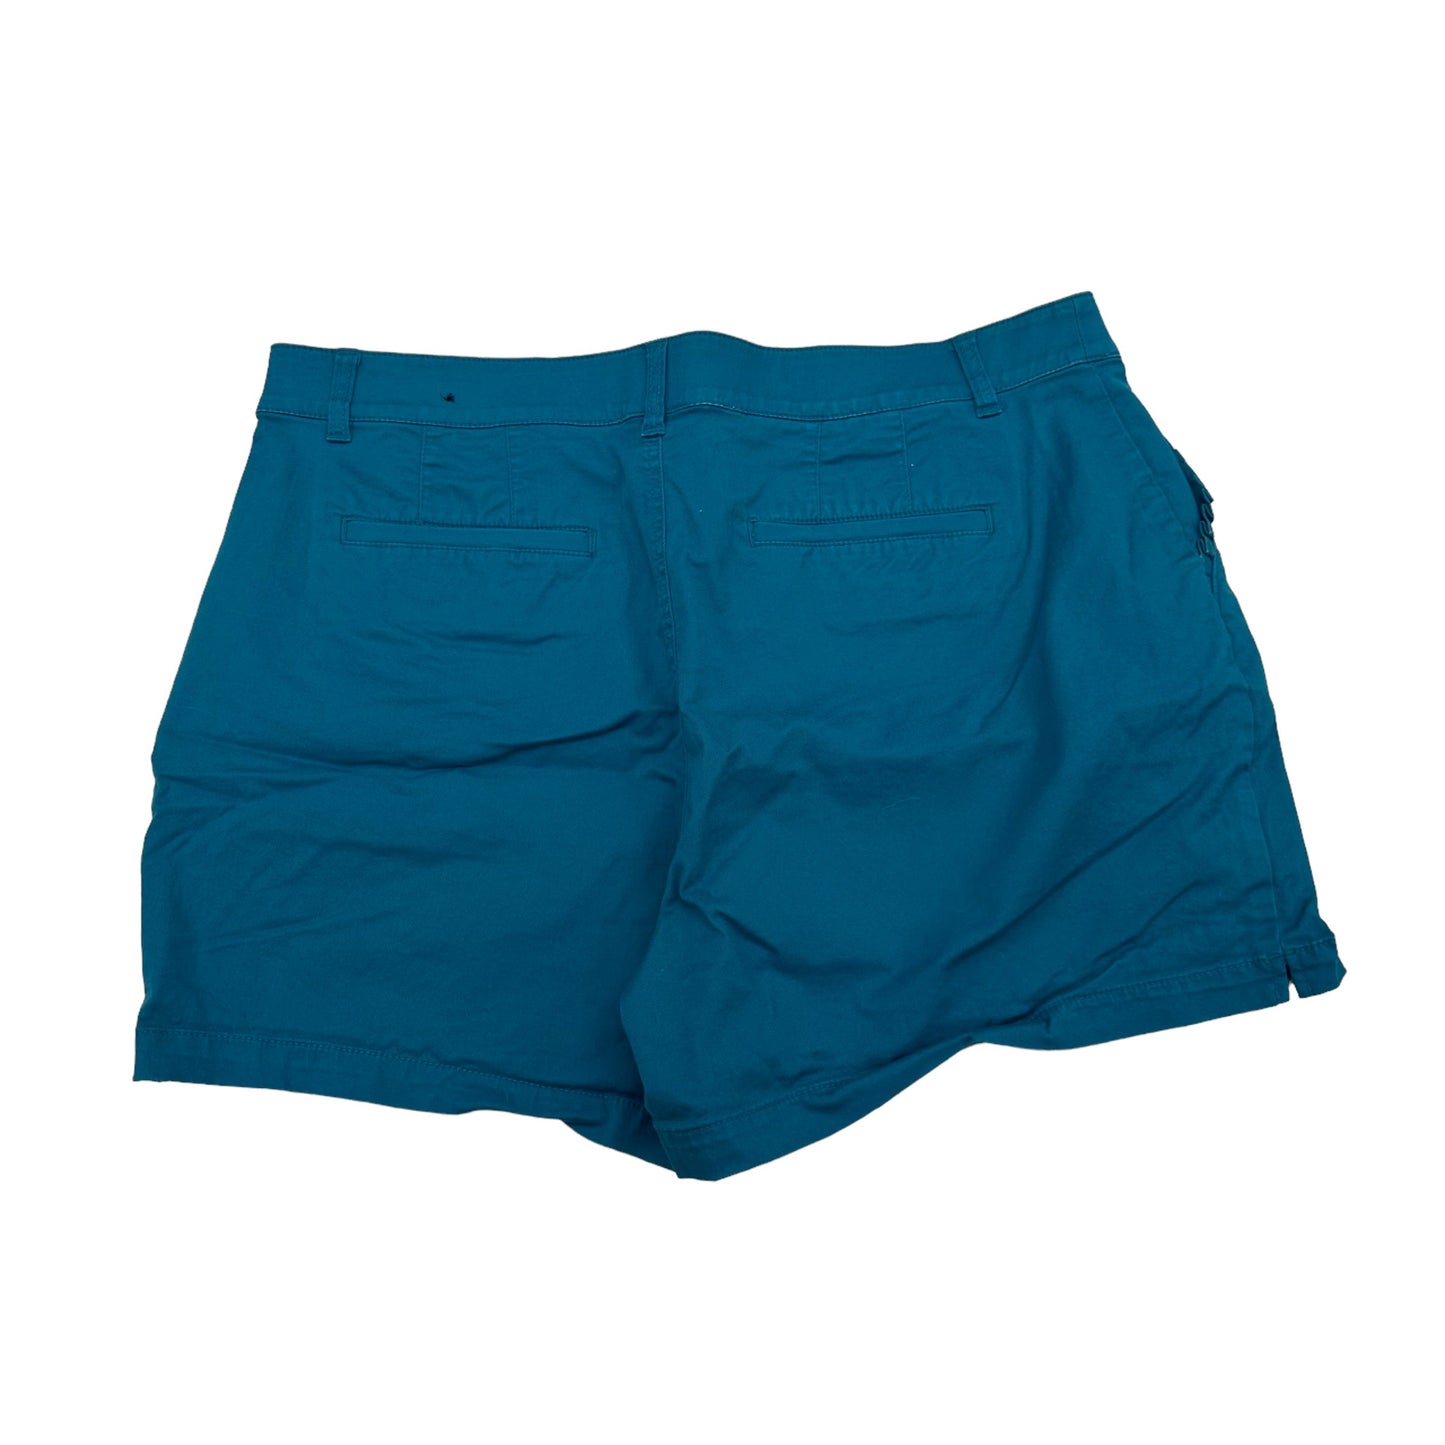 Shorts By Lane Bryant  Size: 18